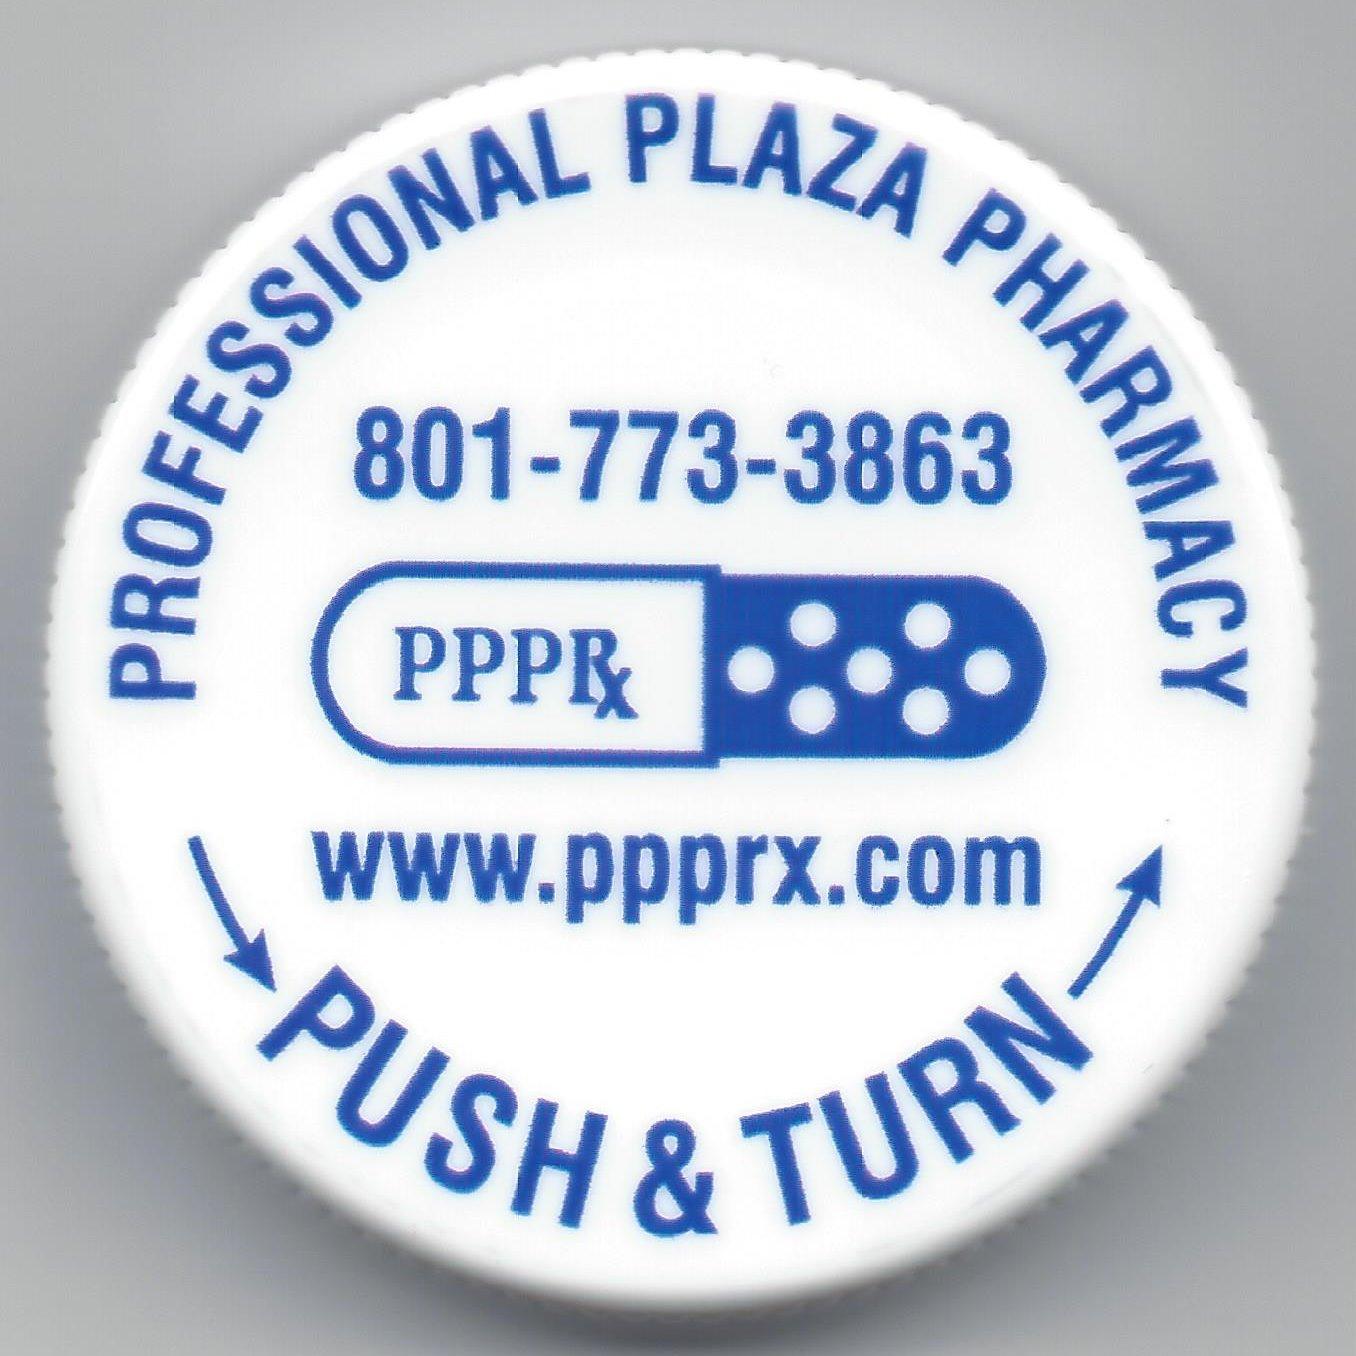 Professional Plaza Pharmacy & Uniform Logo